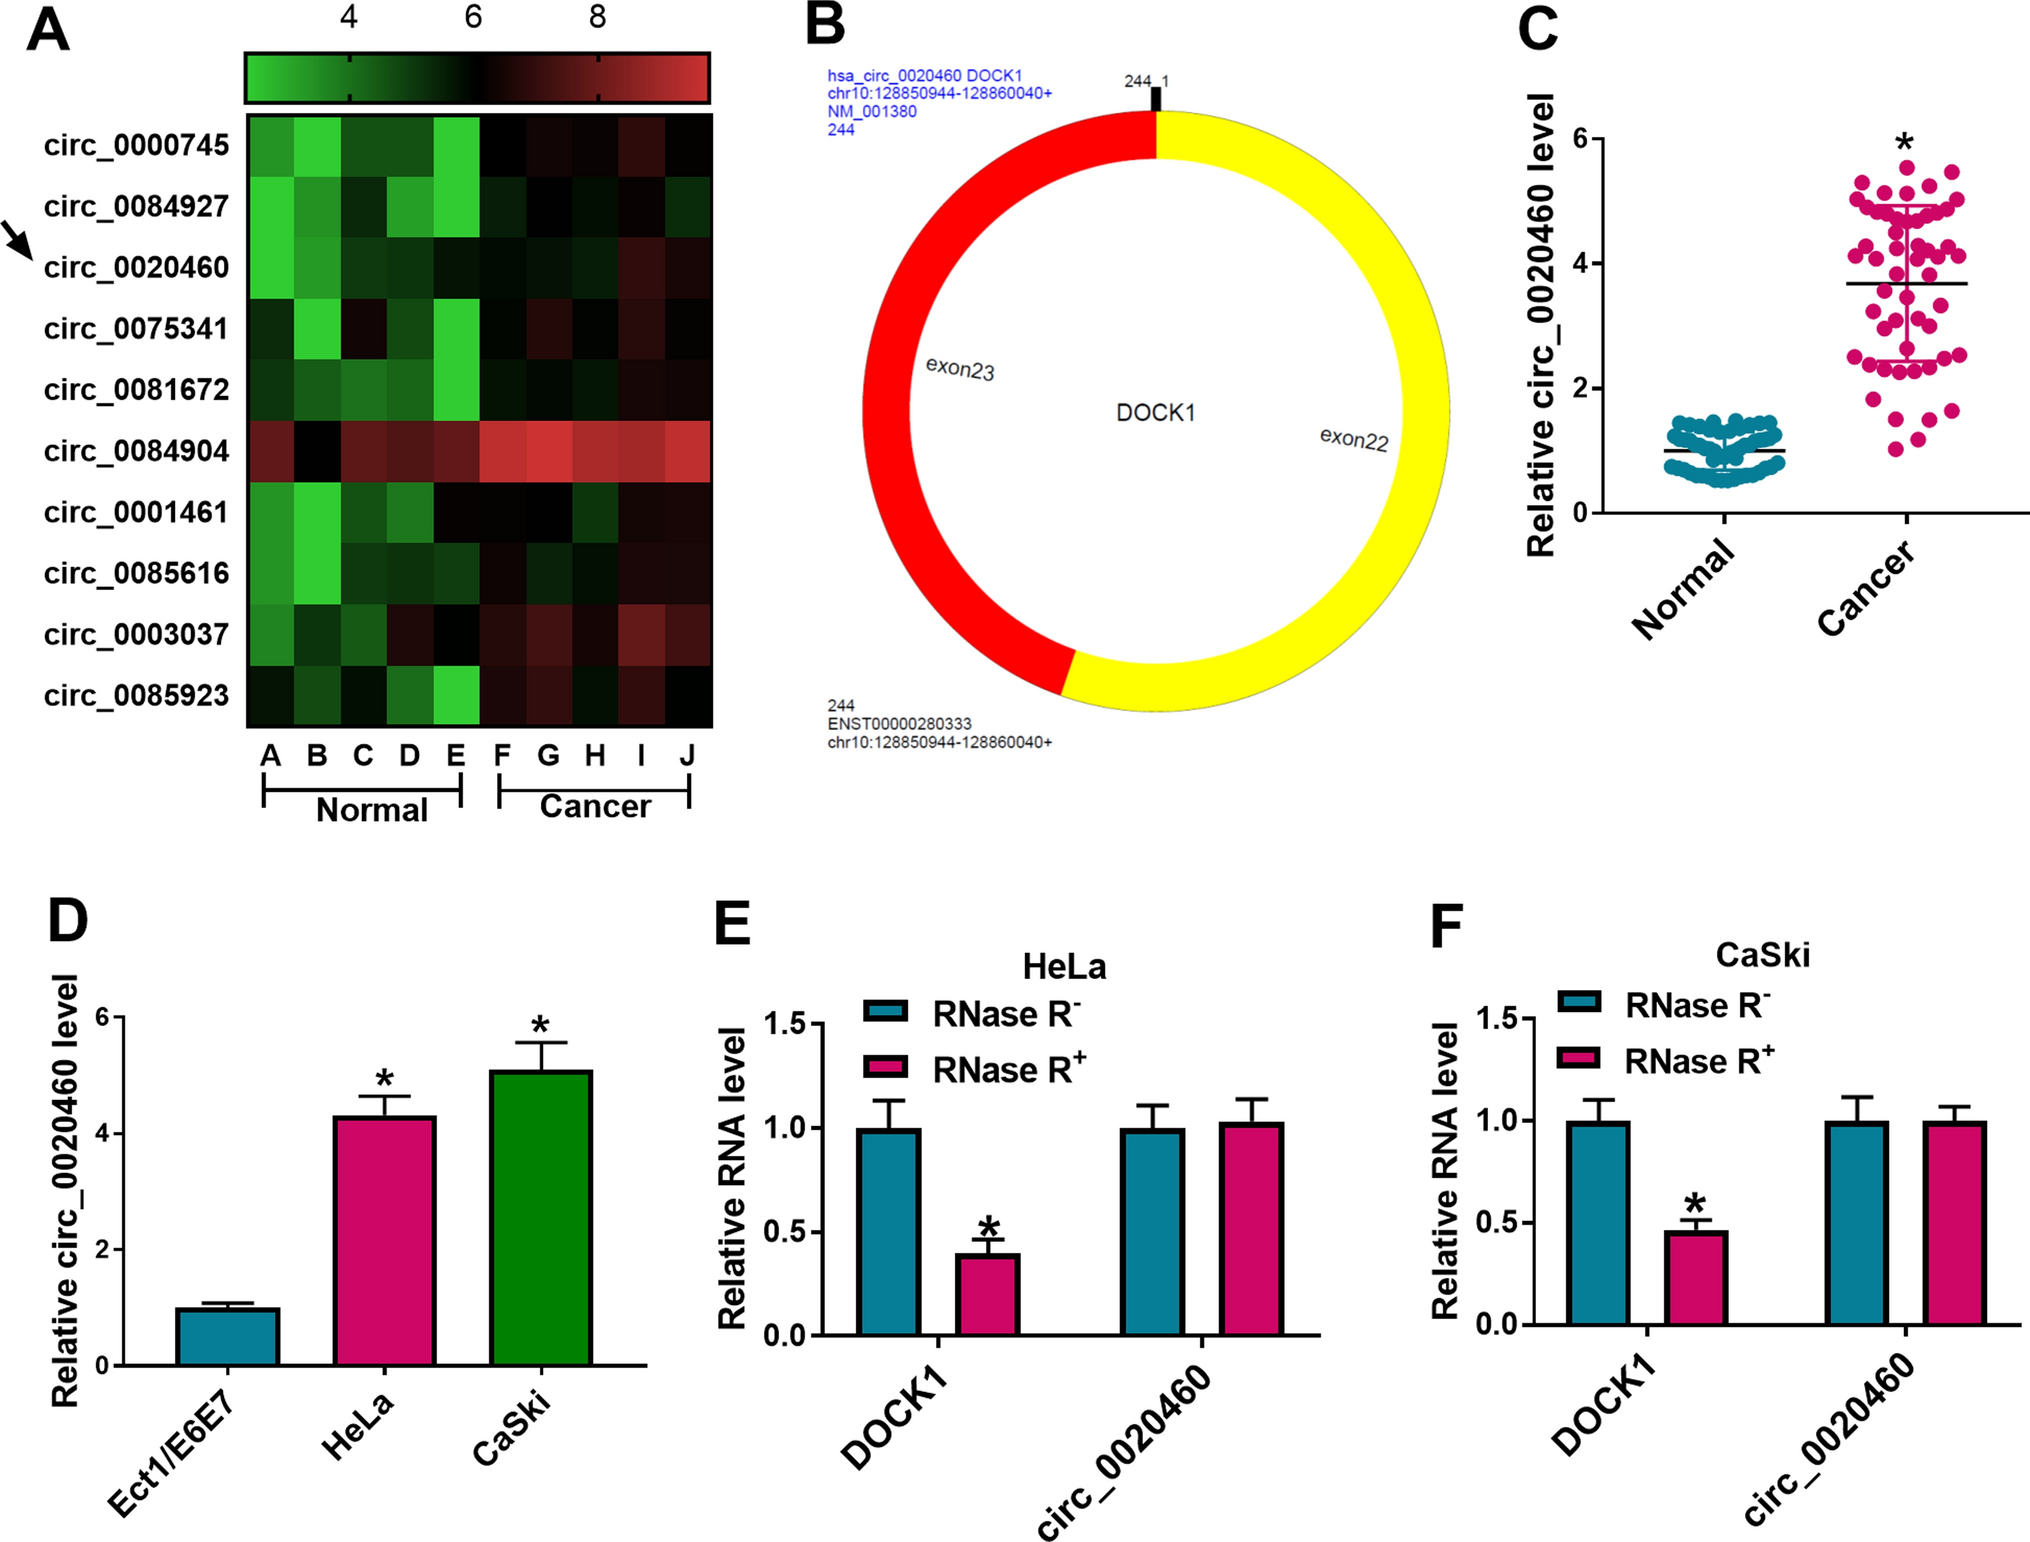 Circ_0020460 drives tumorigenesis in cervical cancer through miR-485-3p sponging